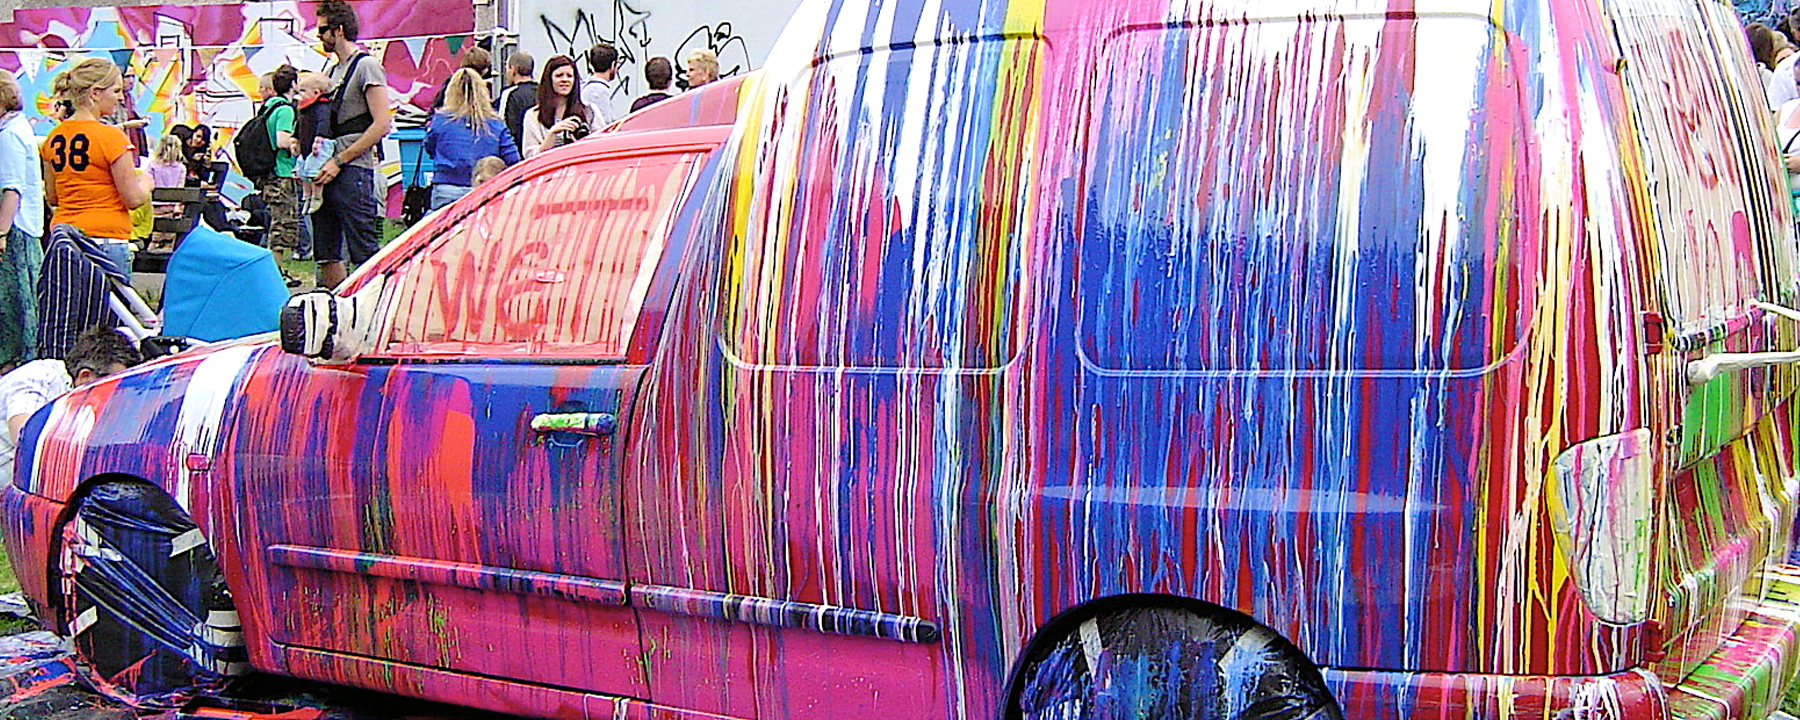 Van decorated in multicoloured paint work